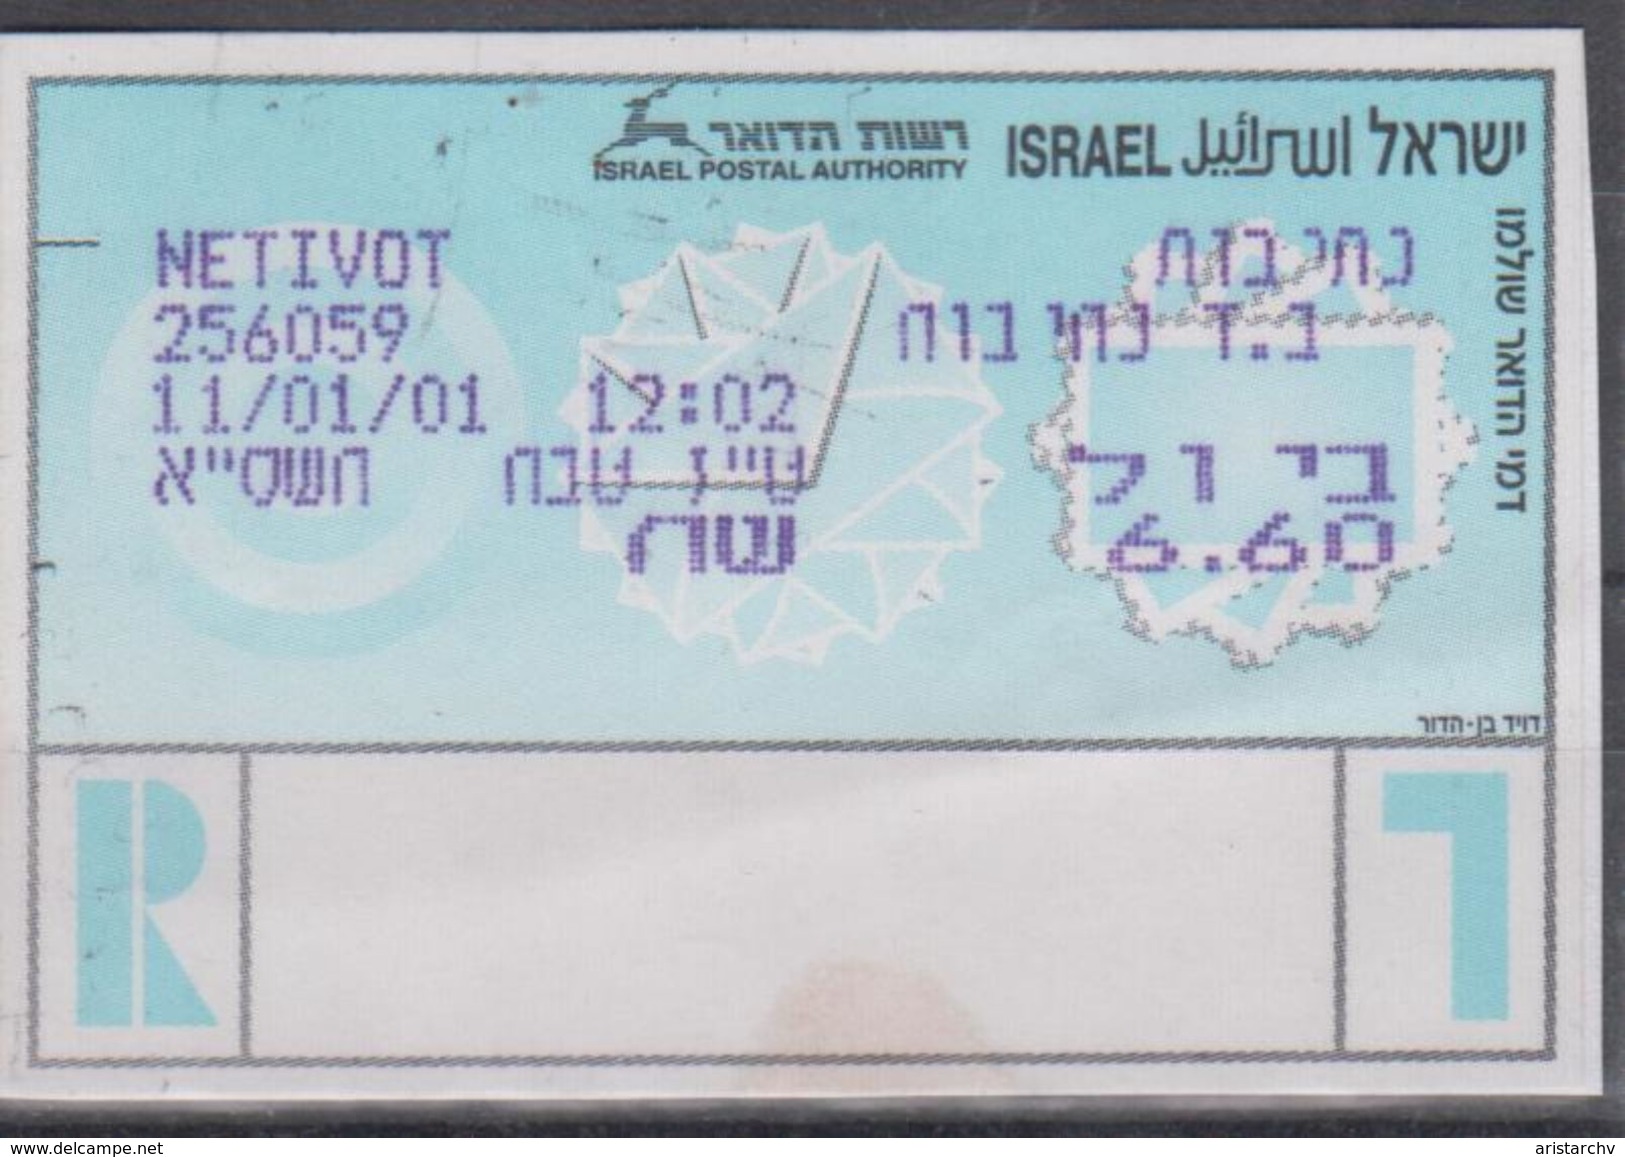 ISRAEL 2001 MASSAD ATM REGISTERED NETIVOT 6.6 SHEKELS CANCELED - Viñetas De Franqueo (Frama)